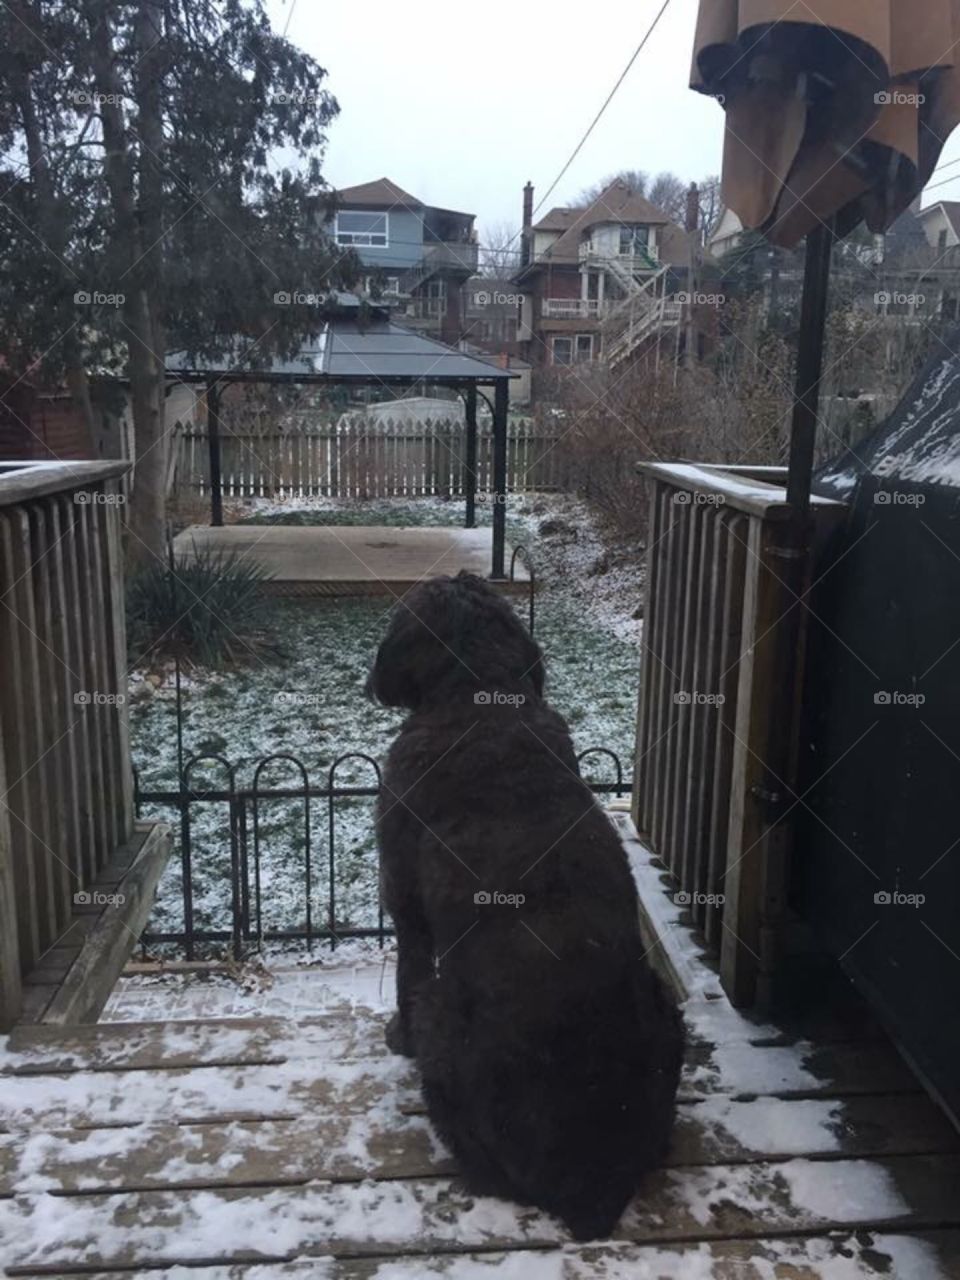 Dog on deck looking into backyard